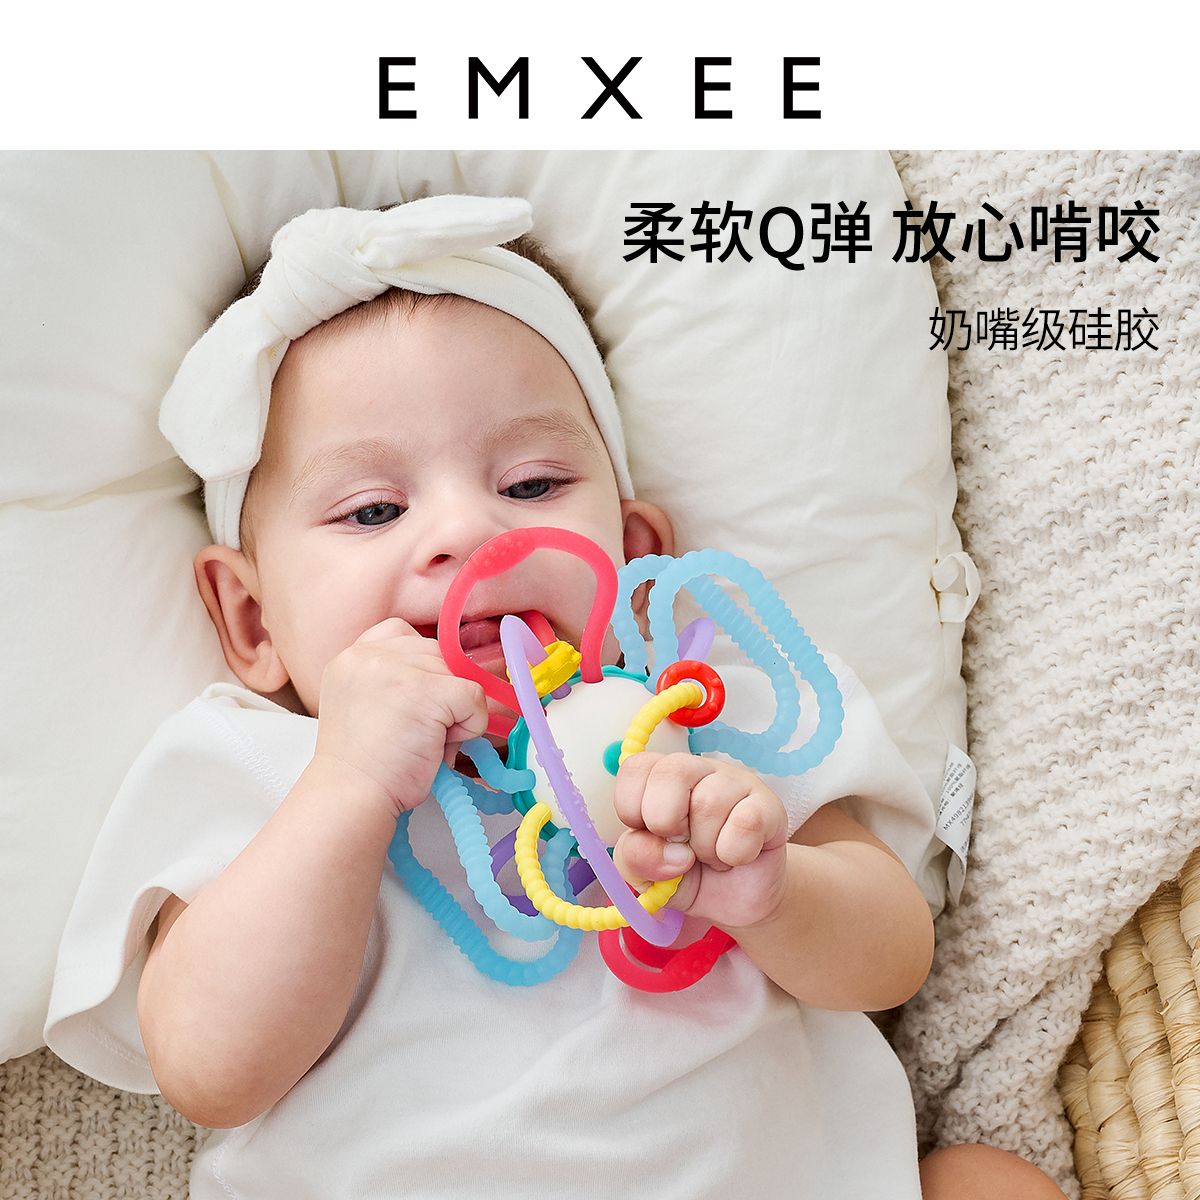 EMXEE 嫚熙 宝宝曼哈顿球牙胶 49.9元